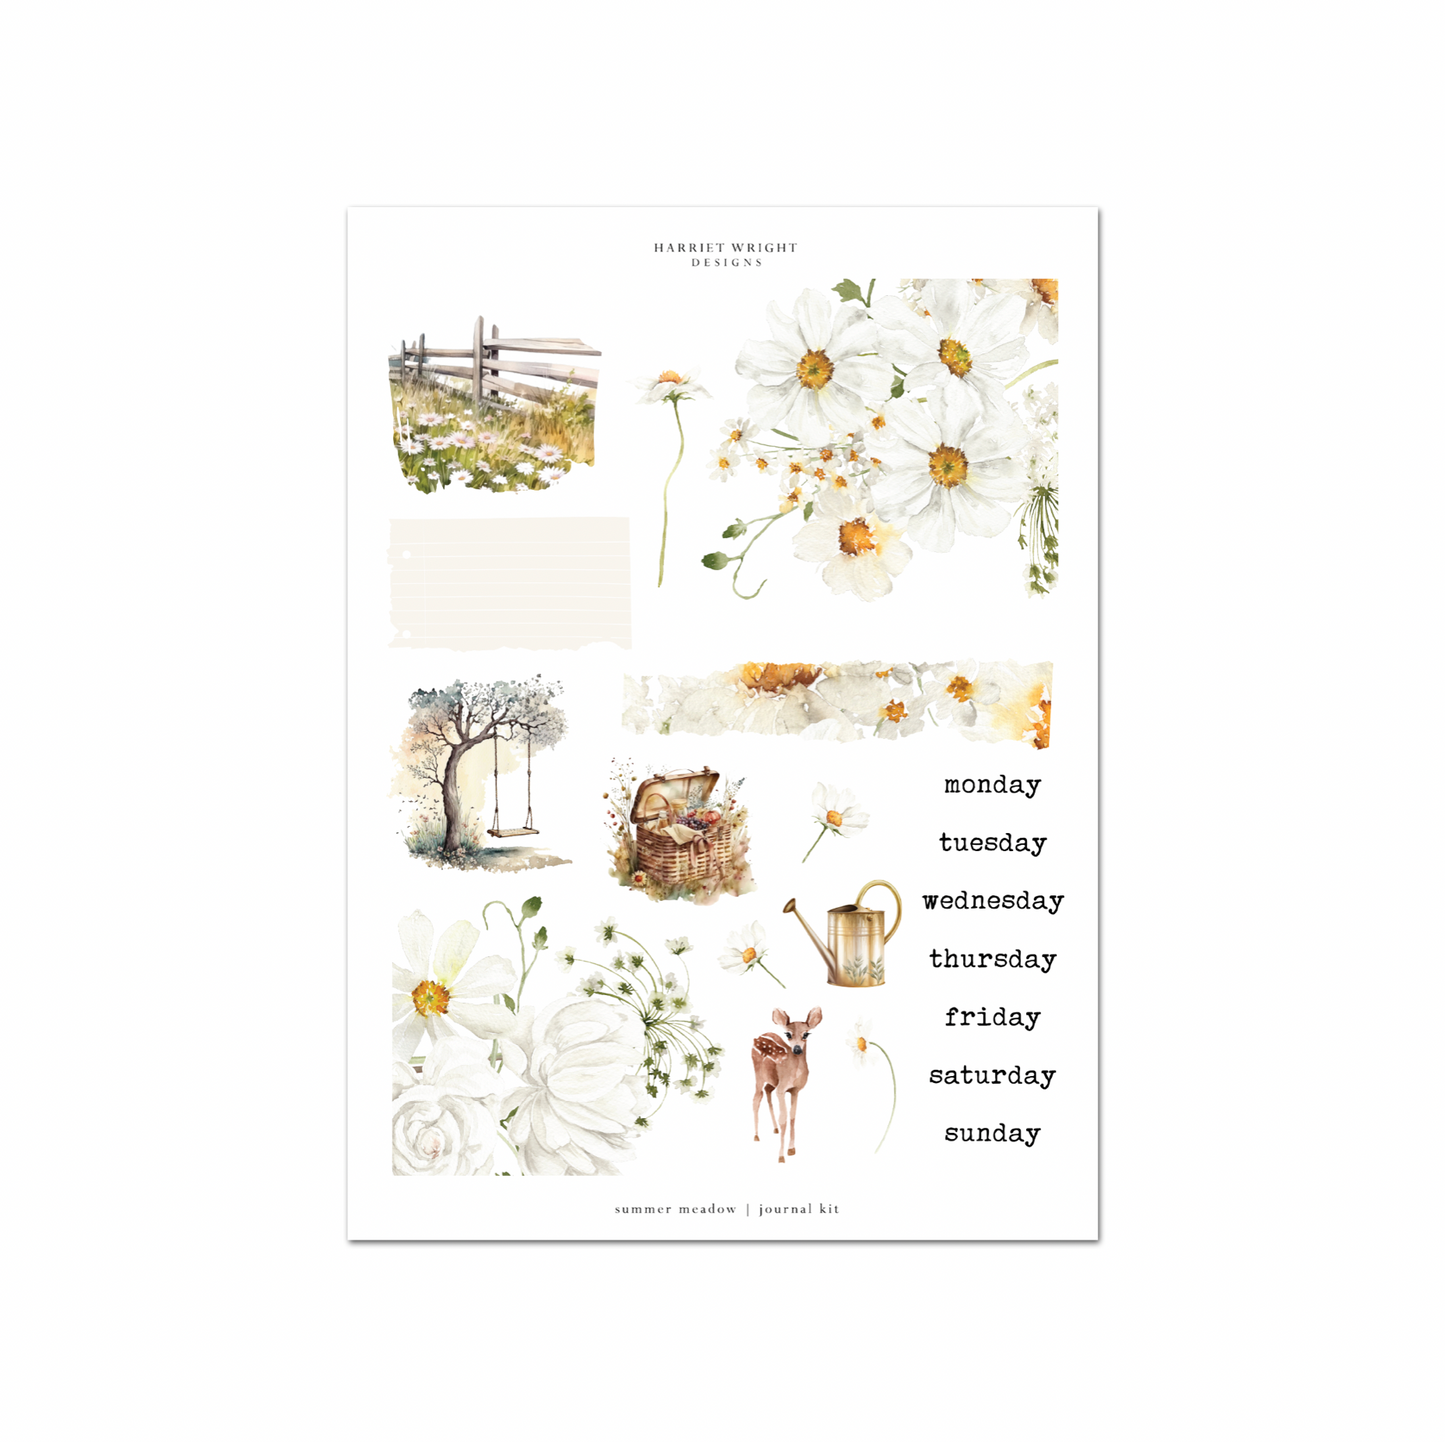 Summer Meadow | Journal Kit